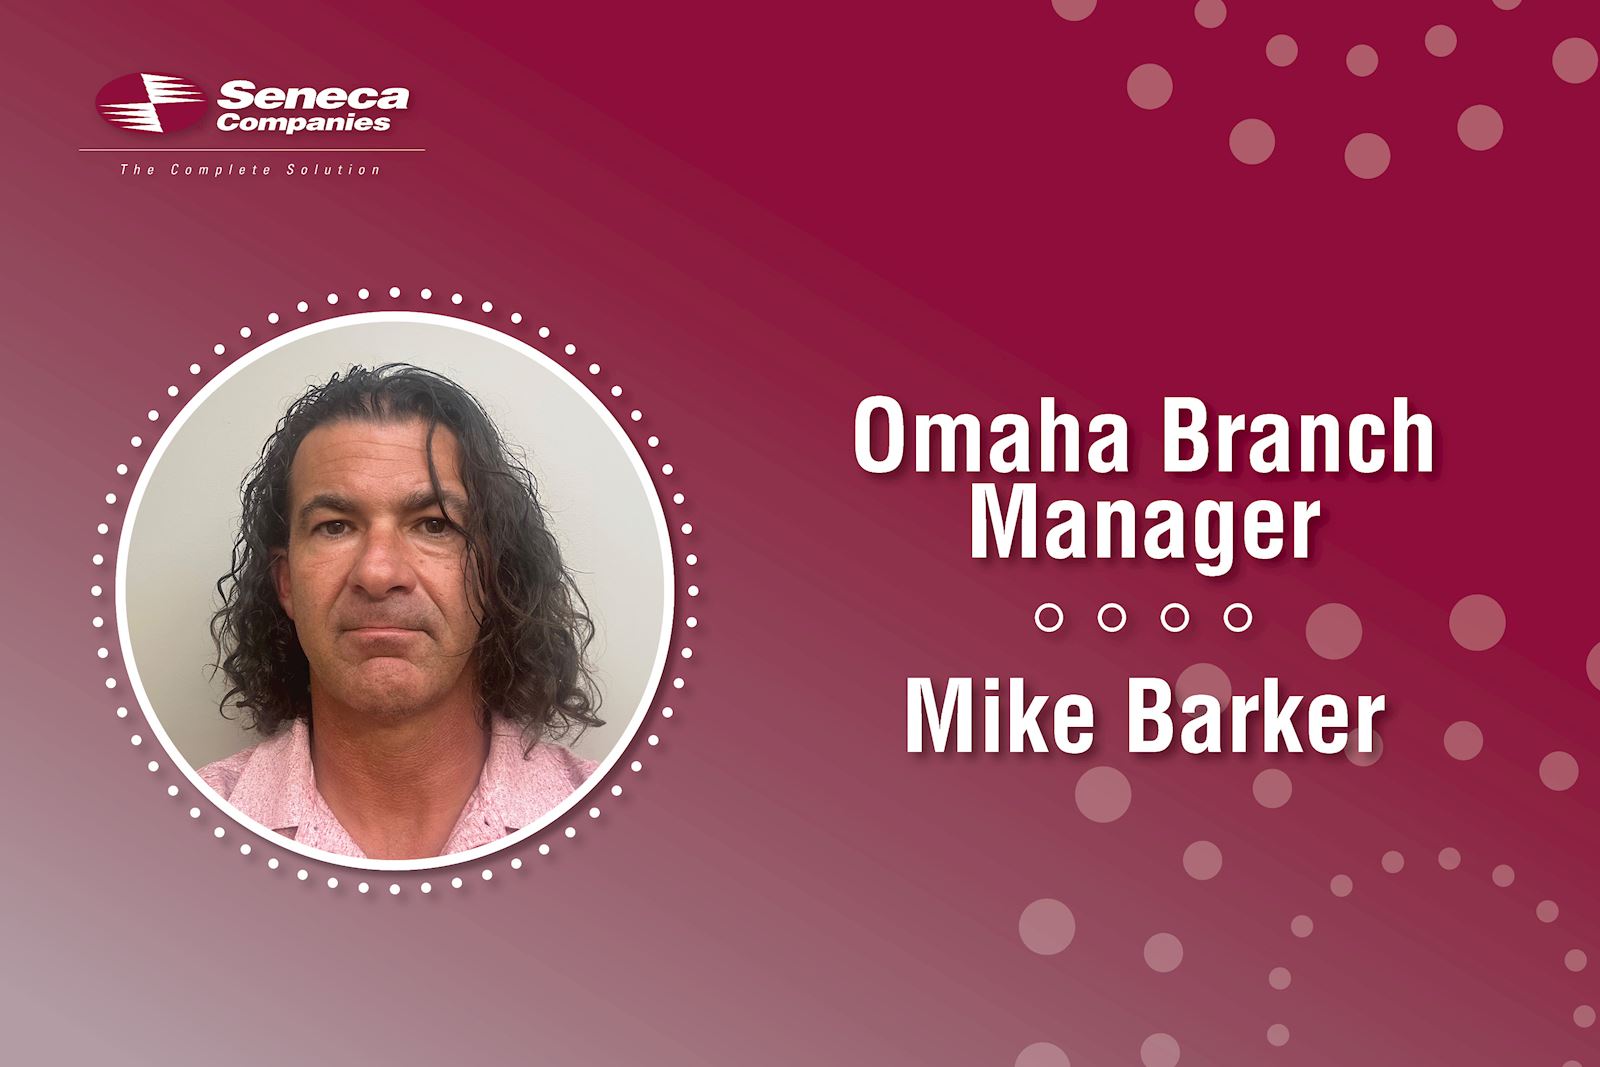 Seneca Companies names Omaha Branch Manager